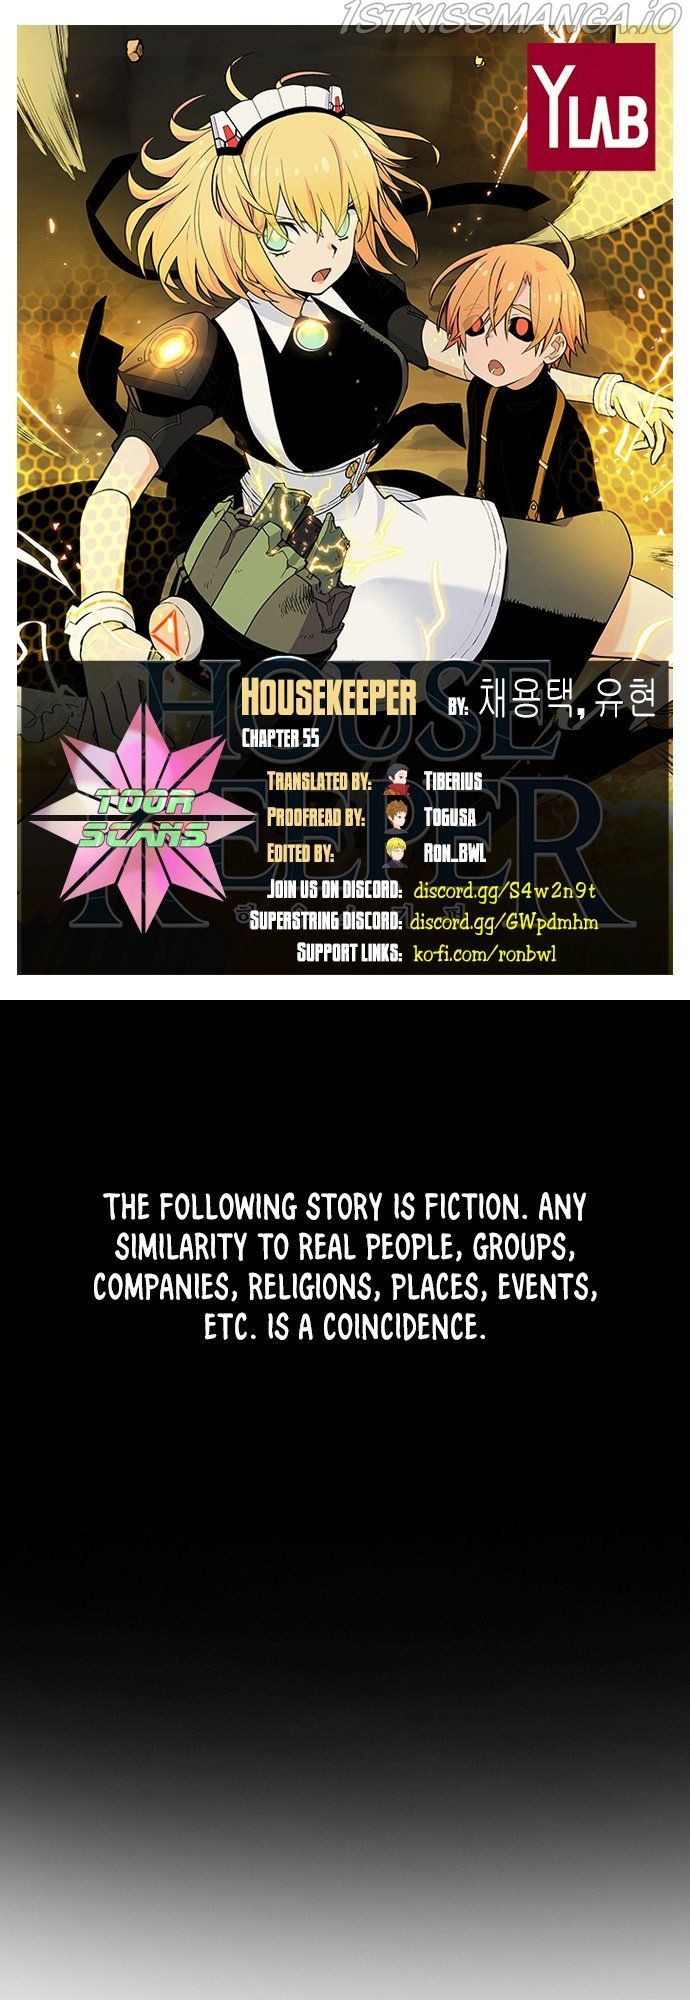 Housekeeper (Chae Yong-Taek) Chapter 55 page 1